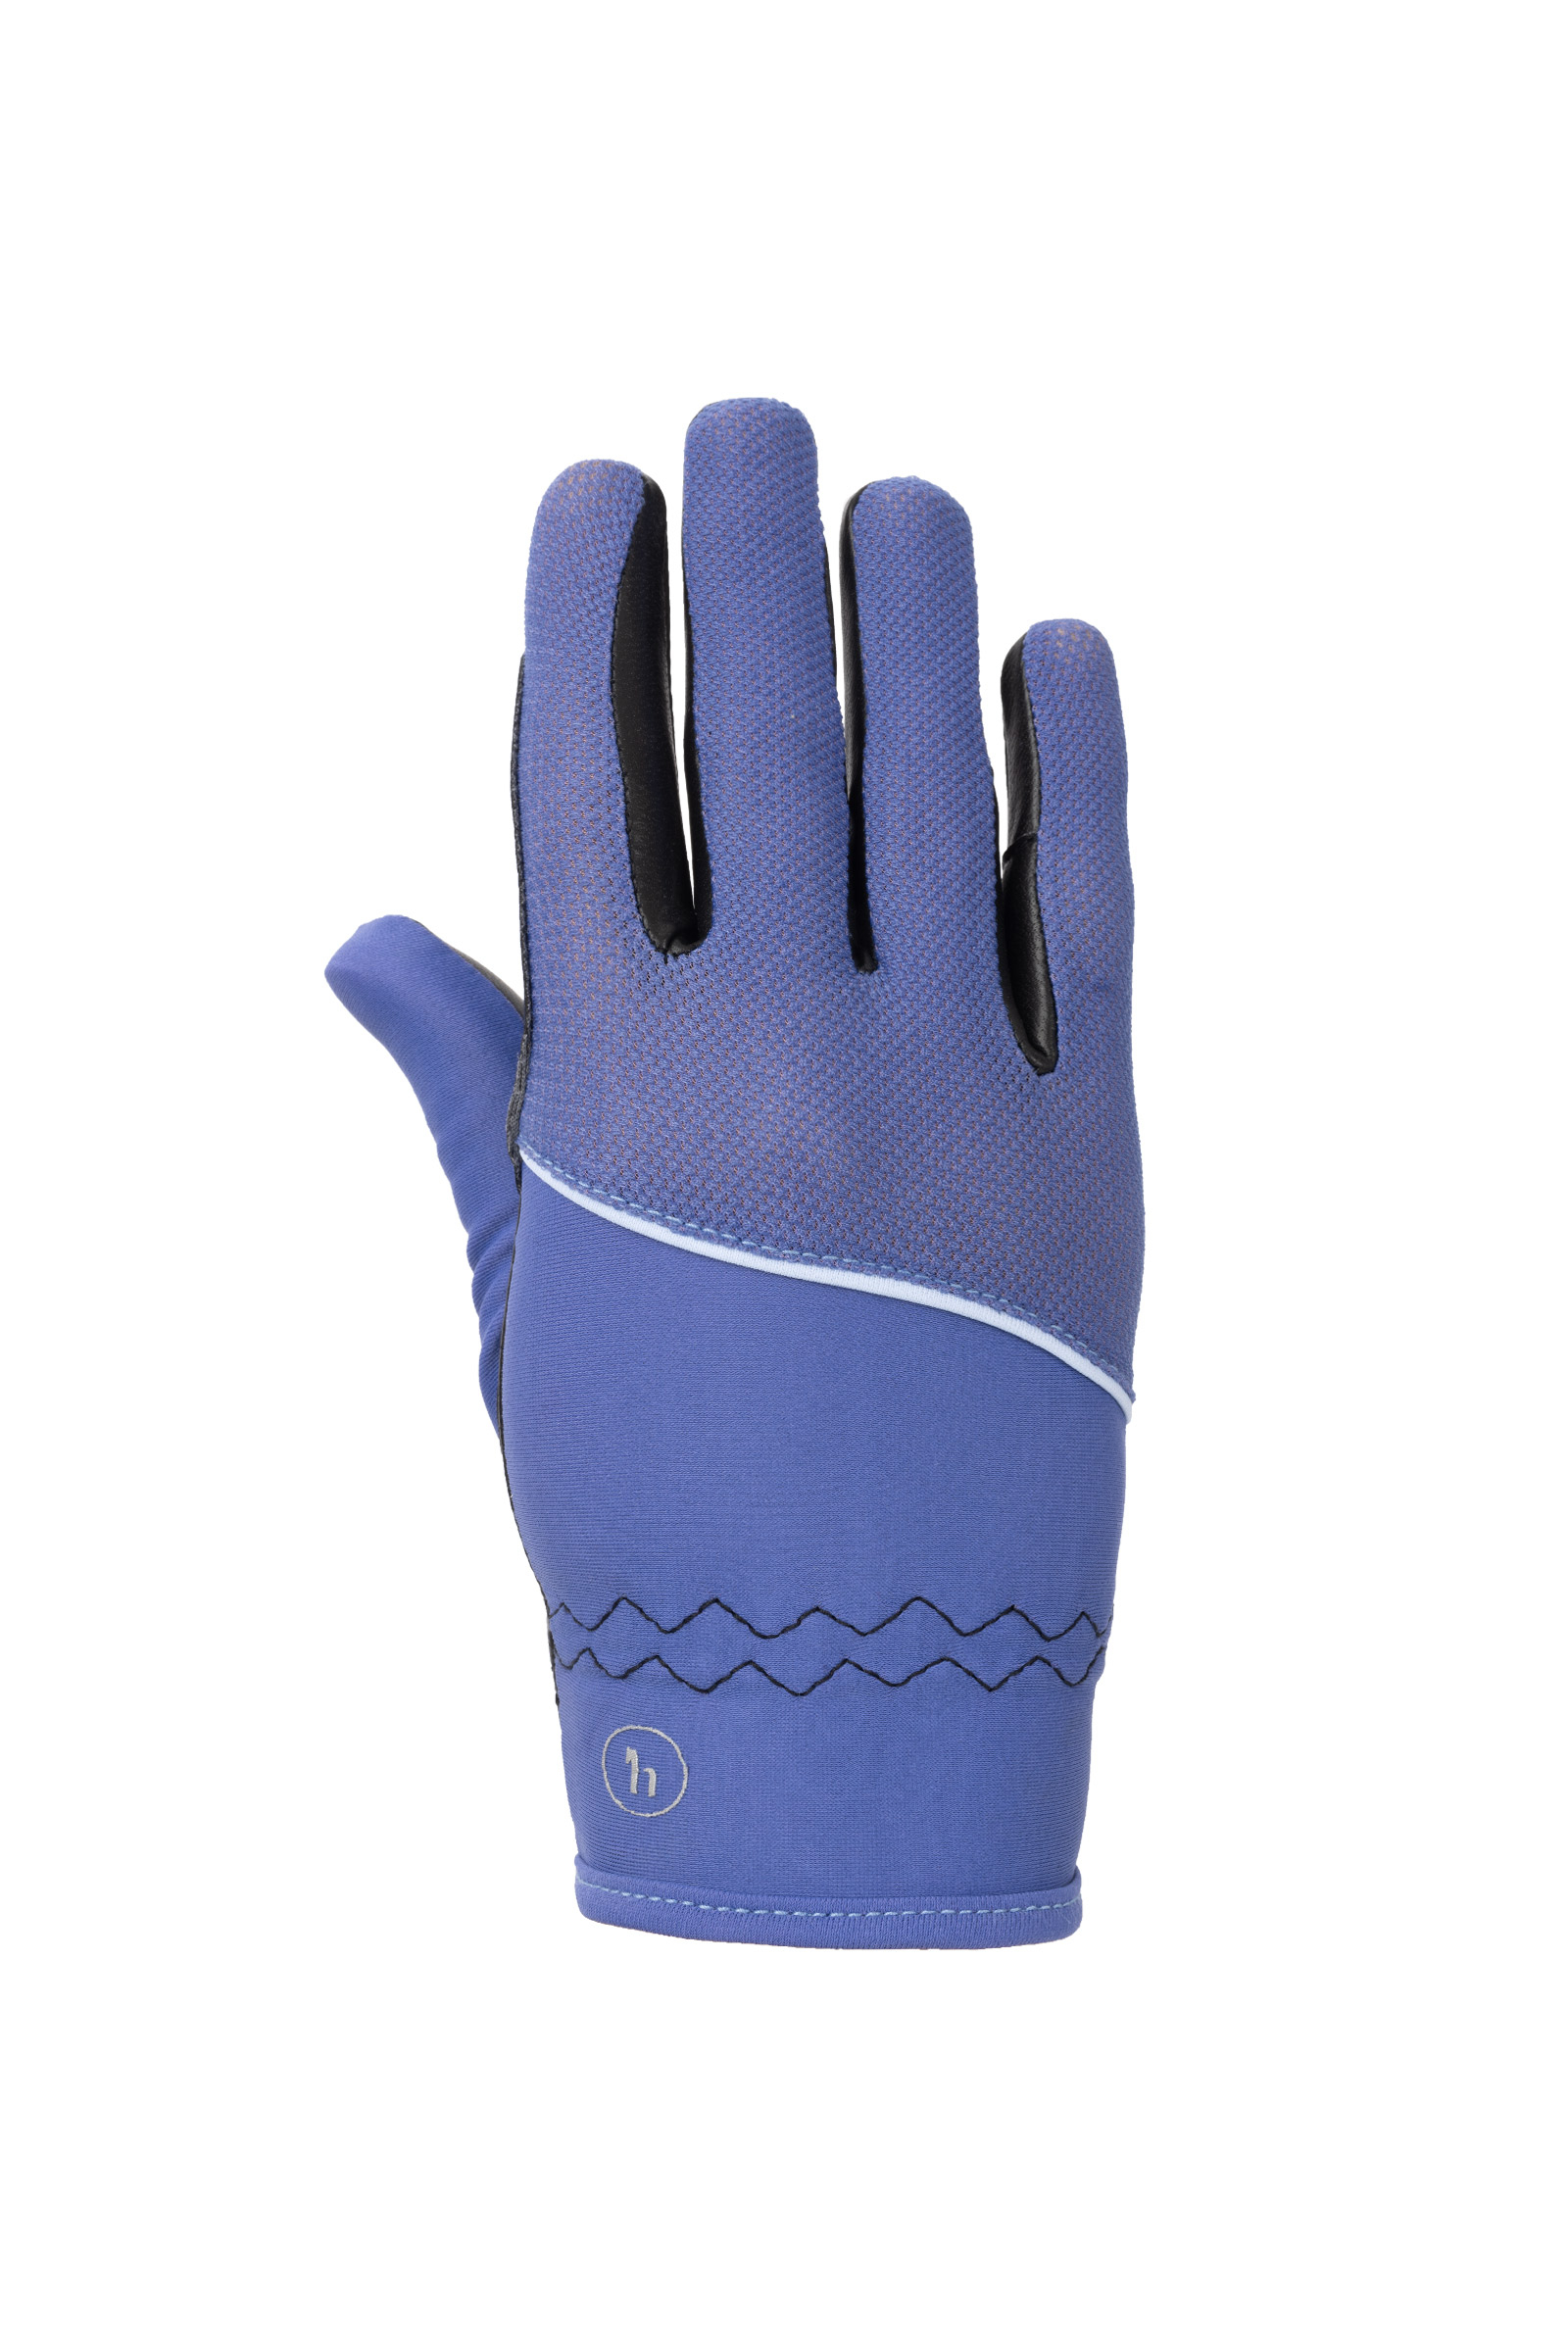 Horze Kids' Nascha Summer Gloves - Cashmere Blue